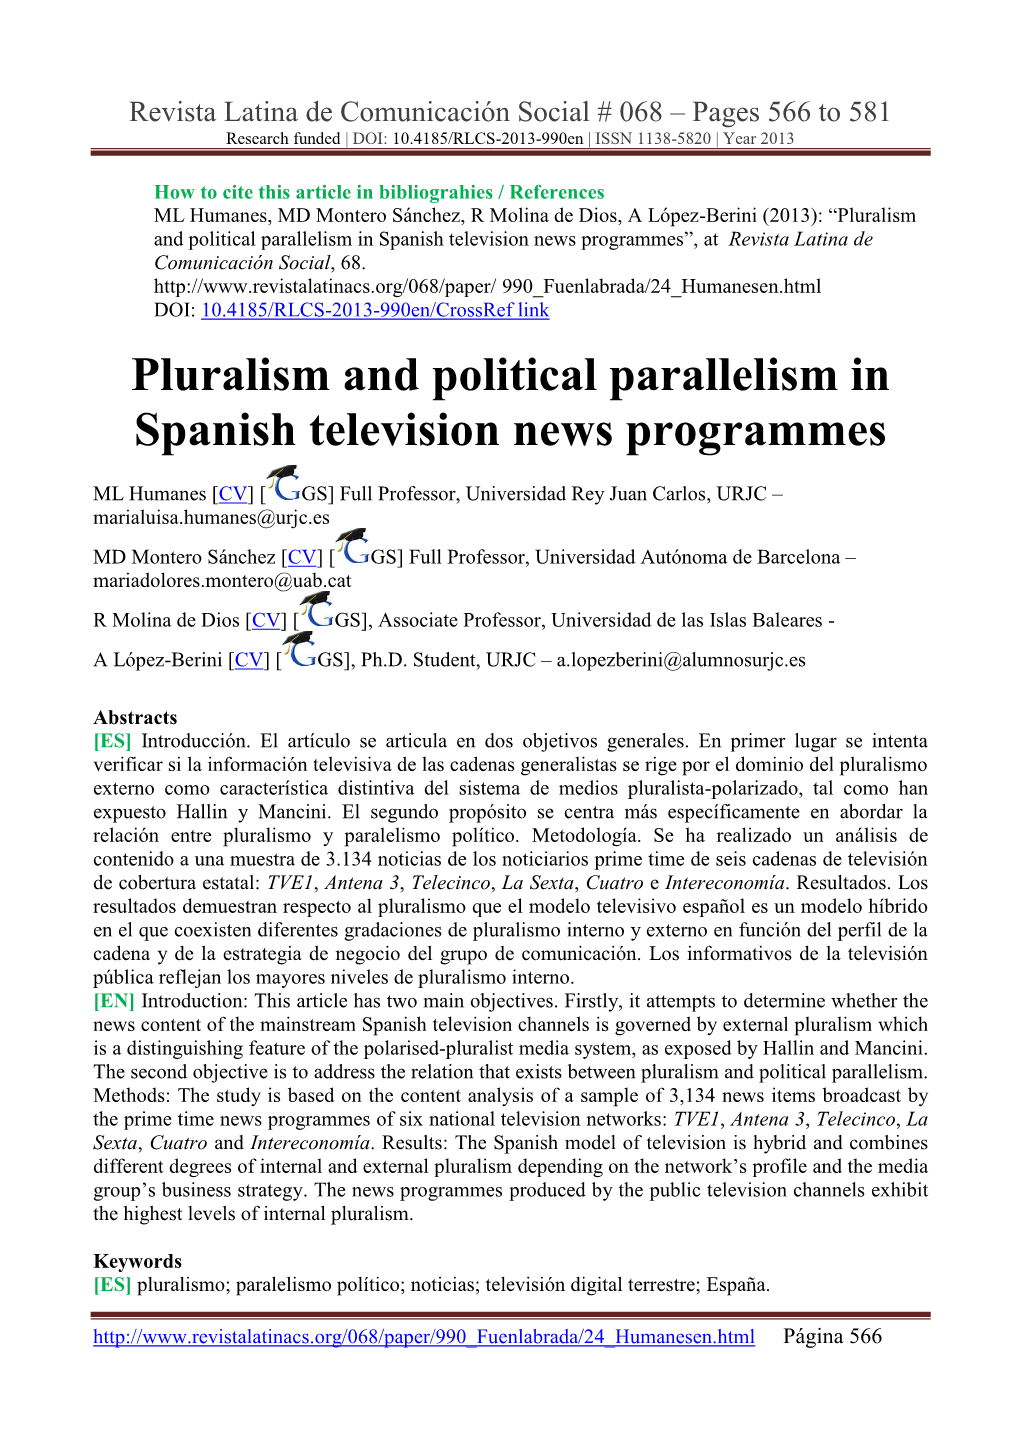 Pluralism and Political Parallelism in Spanish Television News Programmes”, at Revista Latina De Comunicación Social, 68